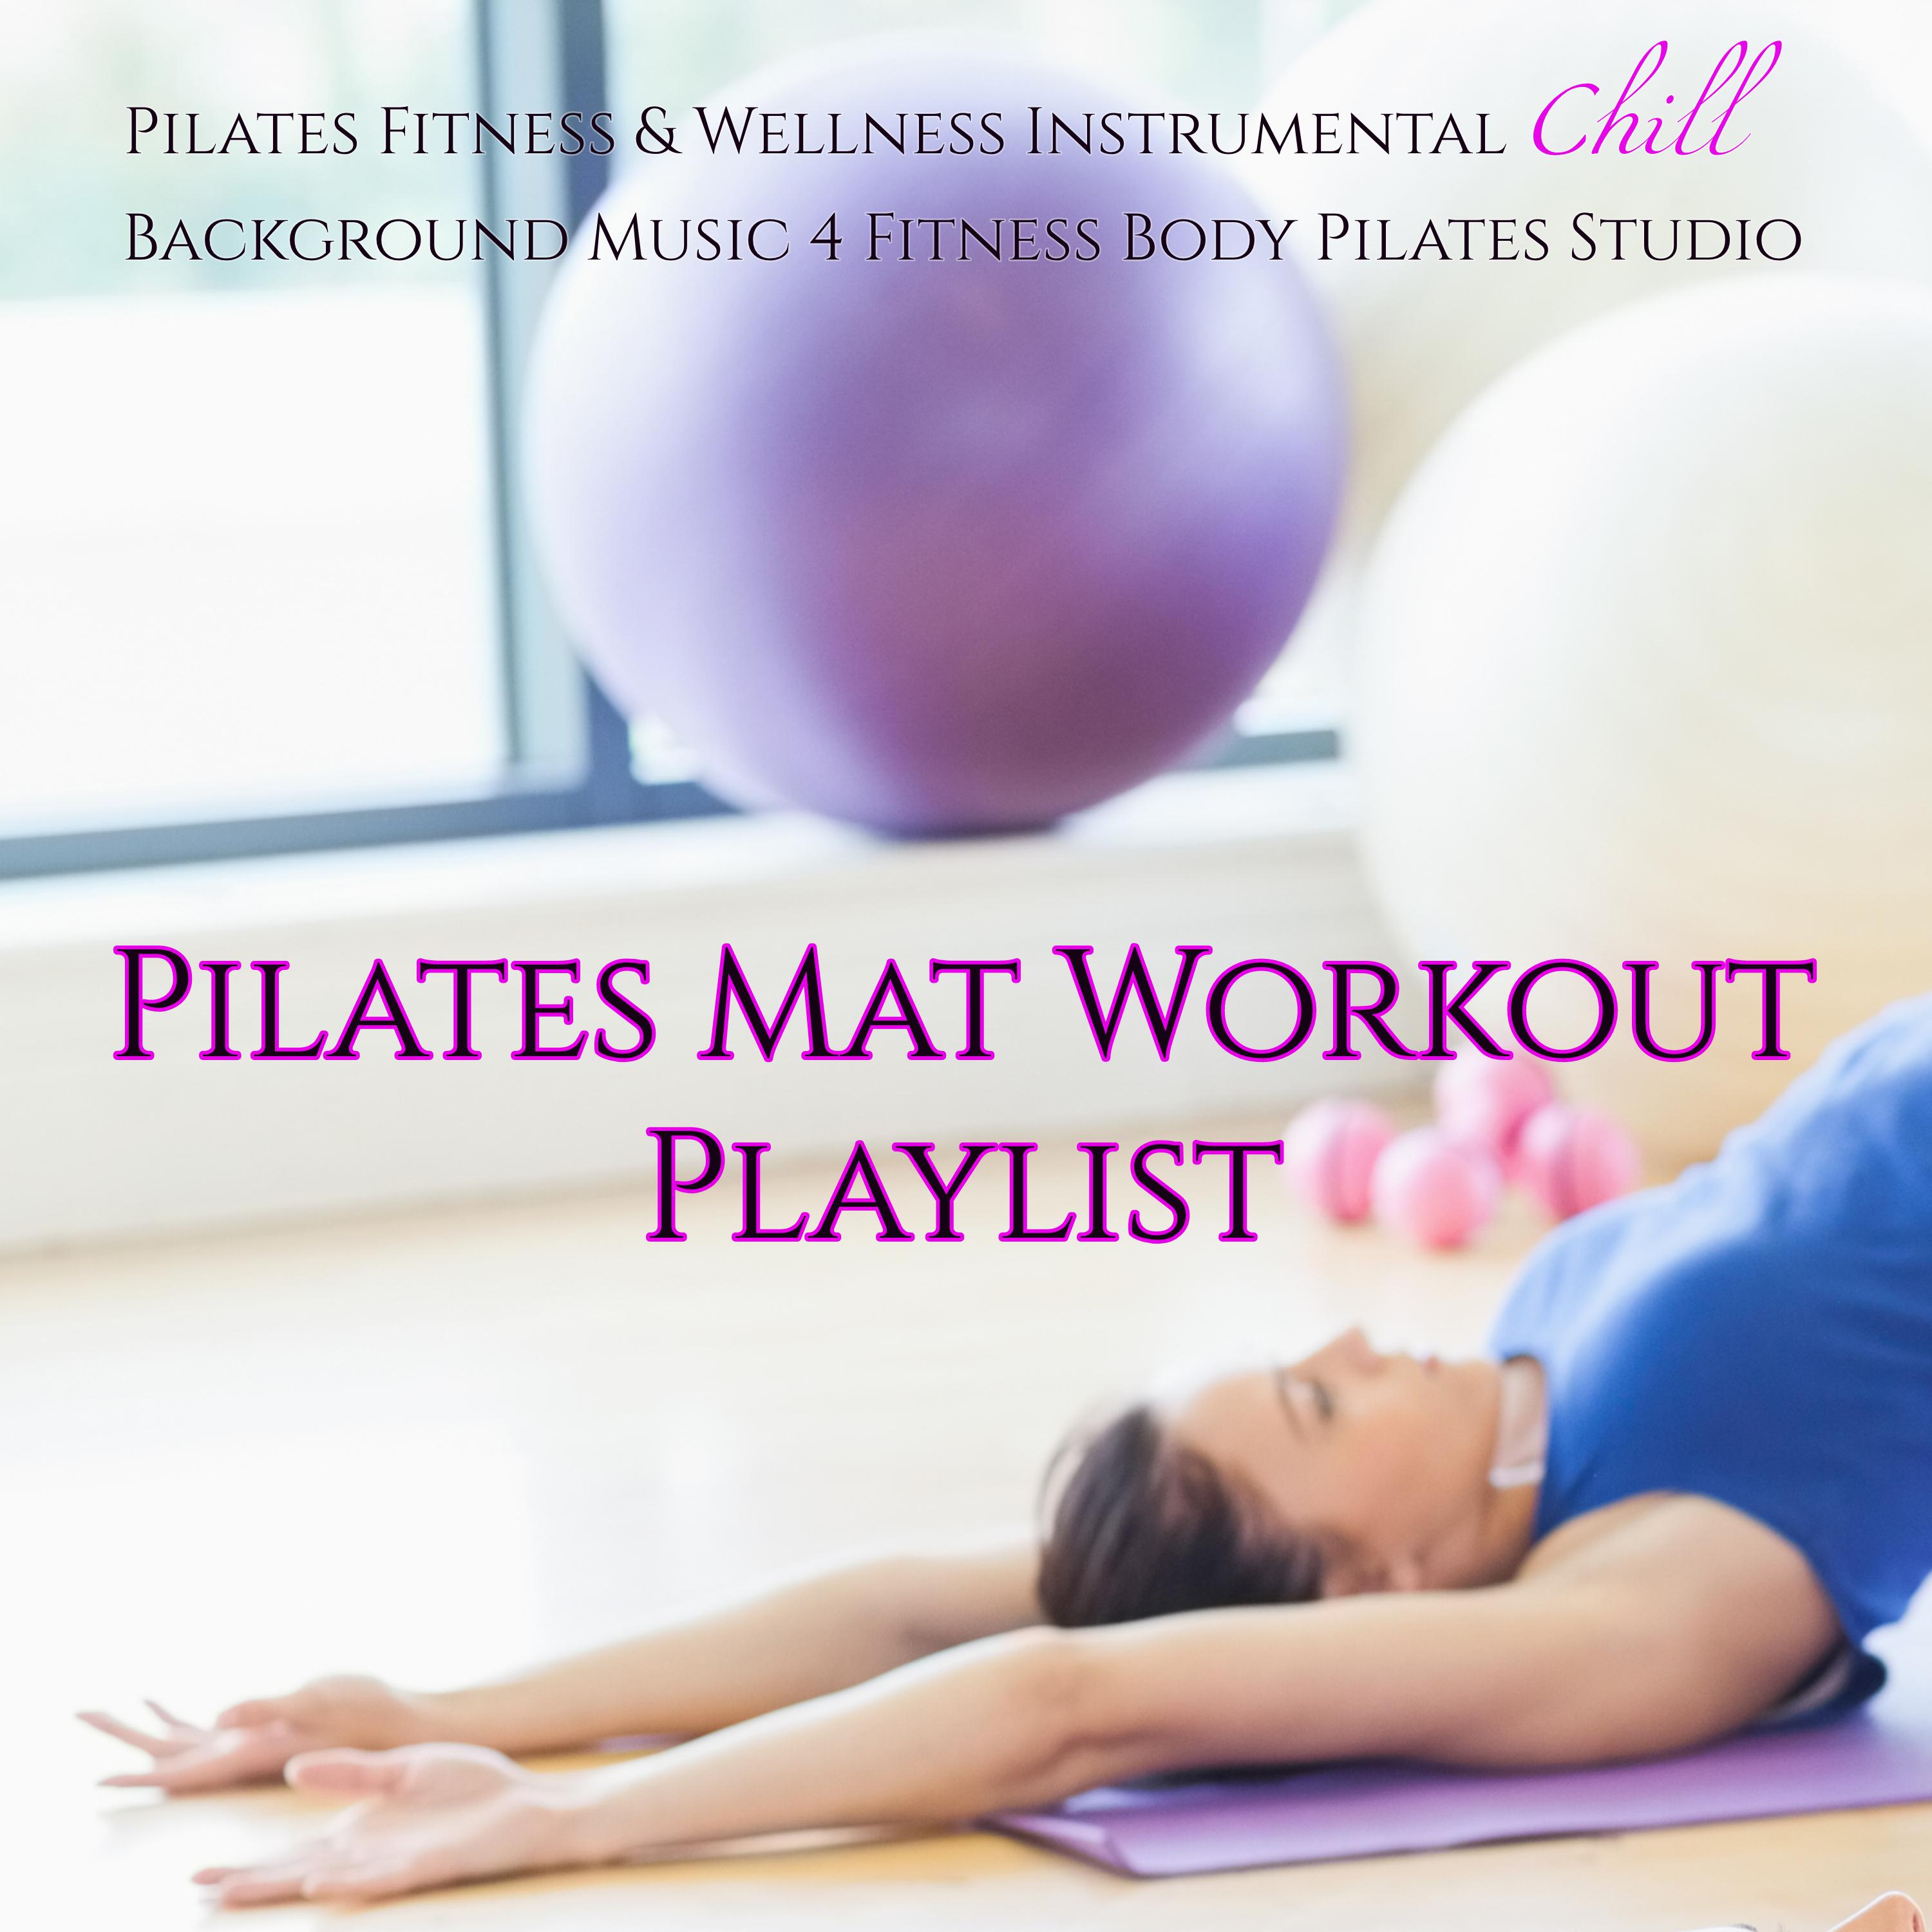 Pilates Mat Workout Playlist  Pilates Fitness  Wellness Instrumental Chill Background Music 4 Fitness Body Pilates Studio